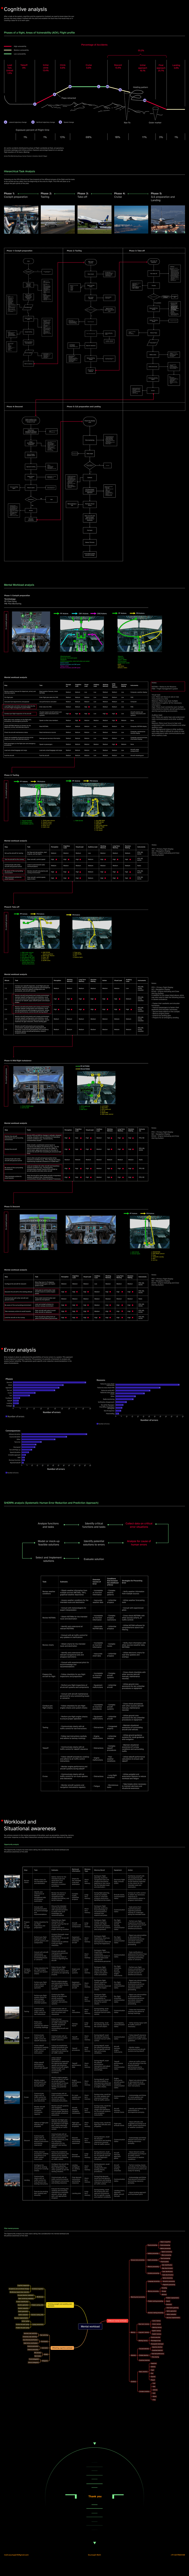 research uxresearch user interface UI/UX user experience hmi aviation human factors Airplane cockpit Cockpit Design